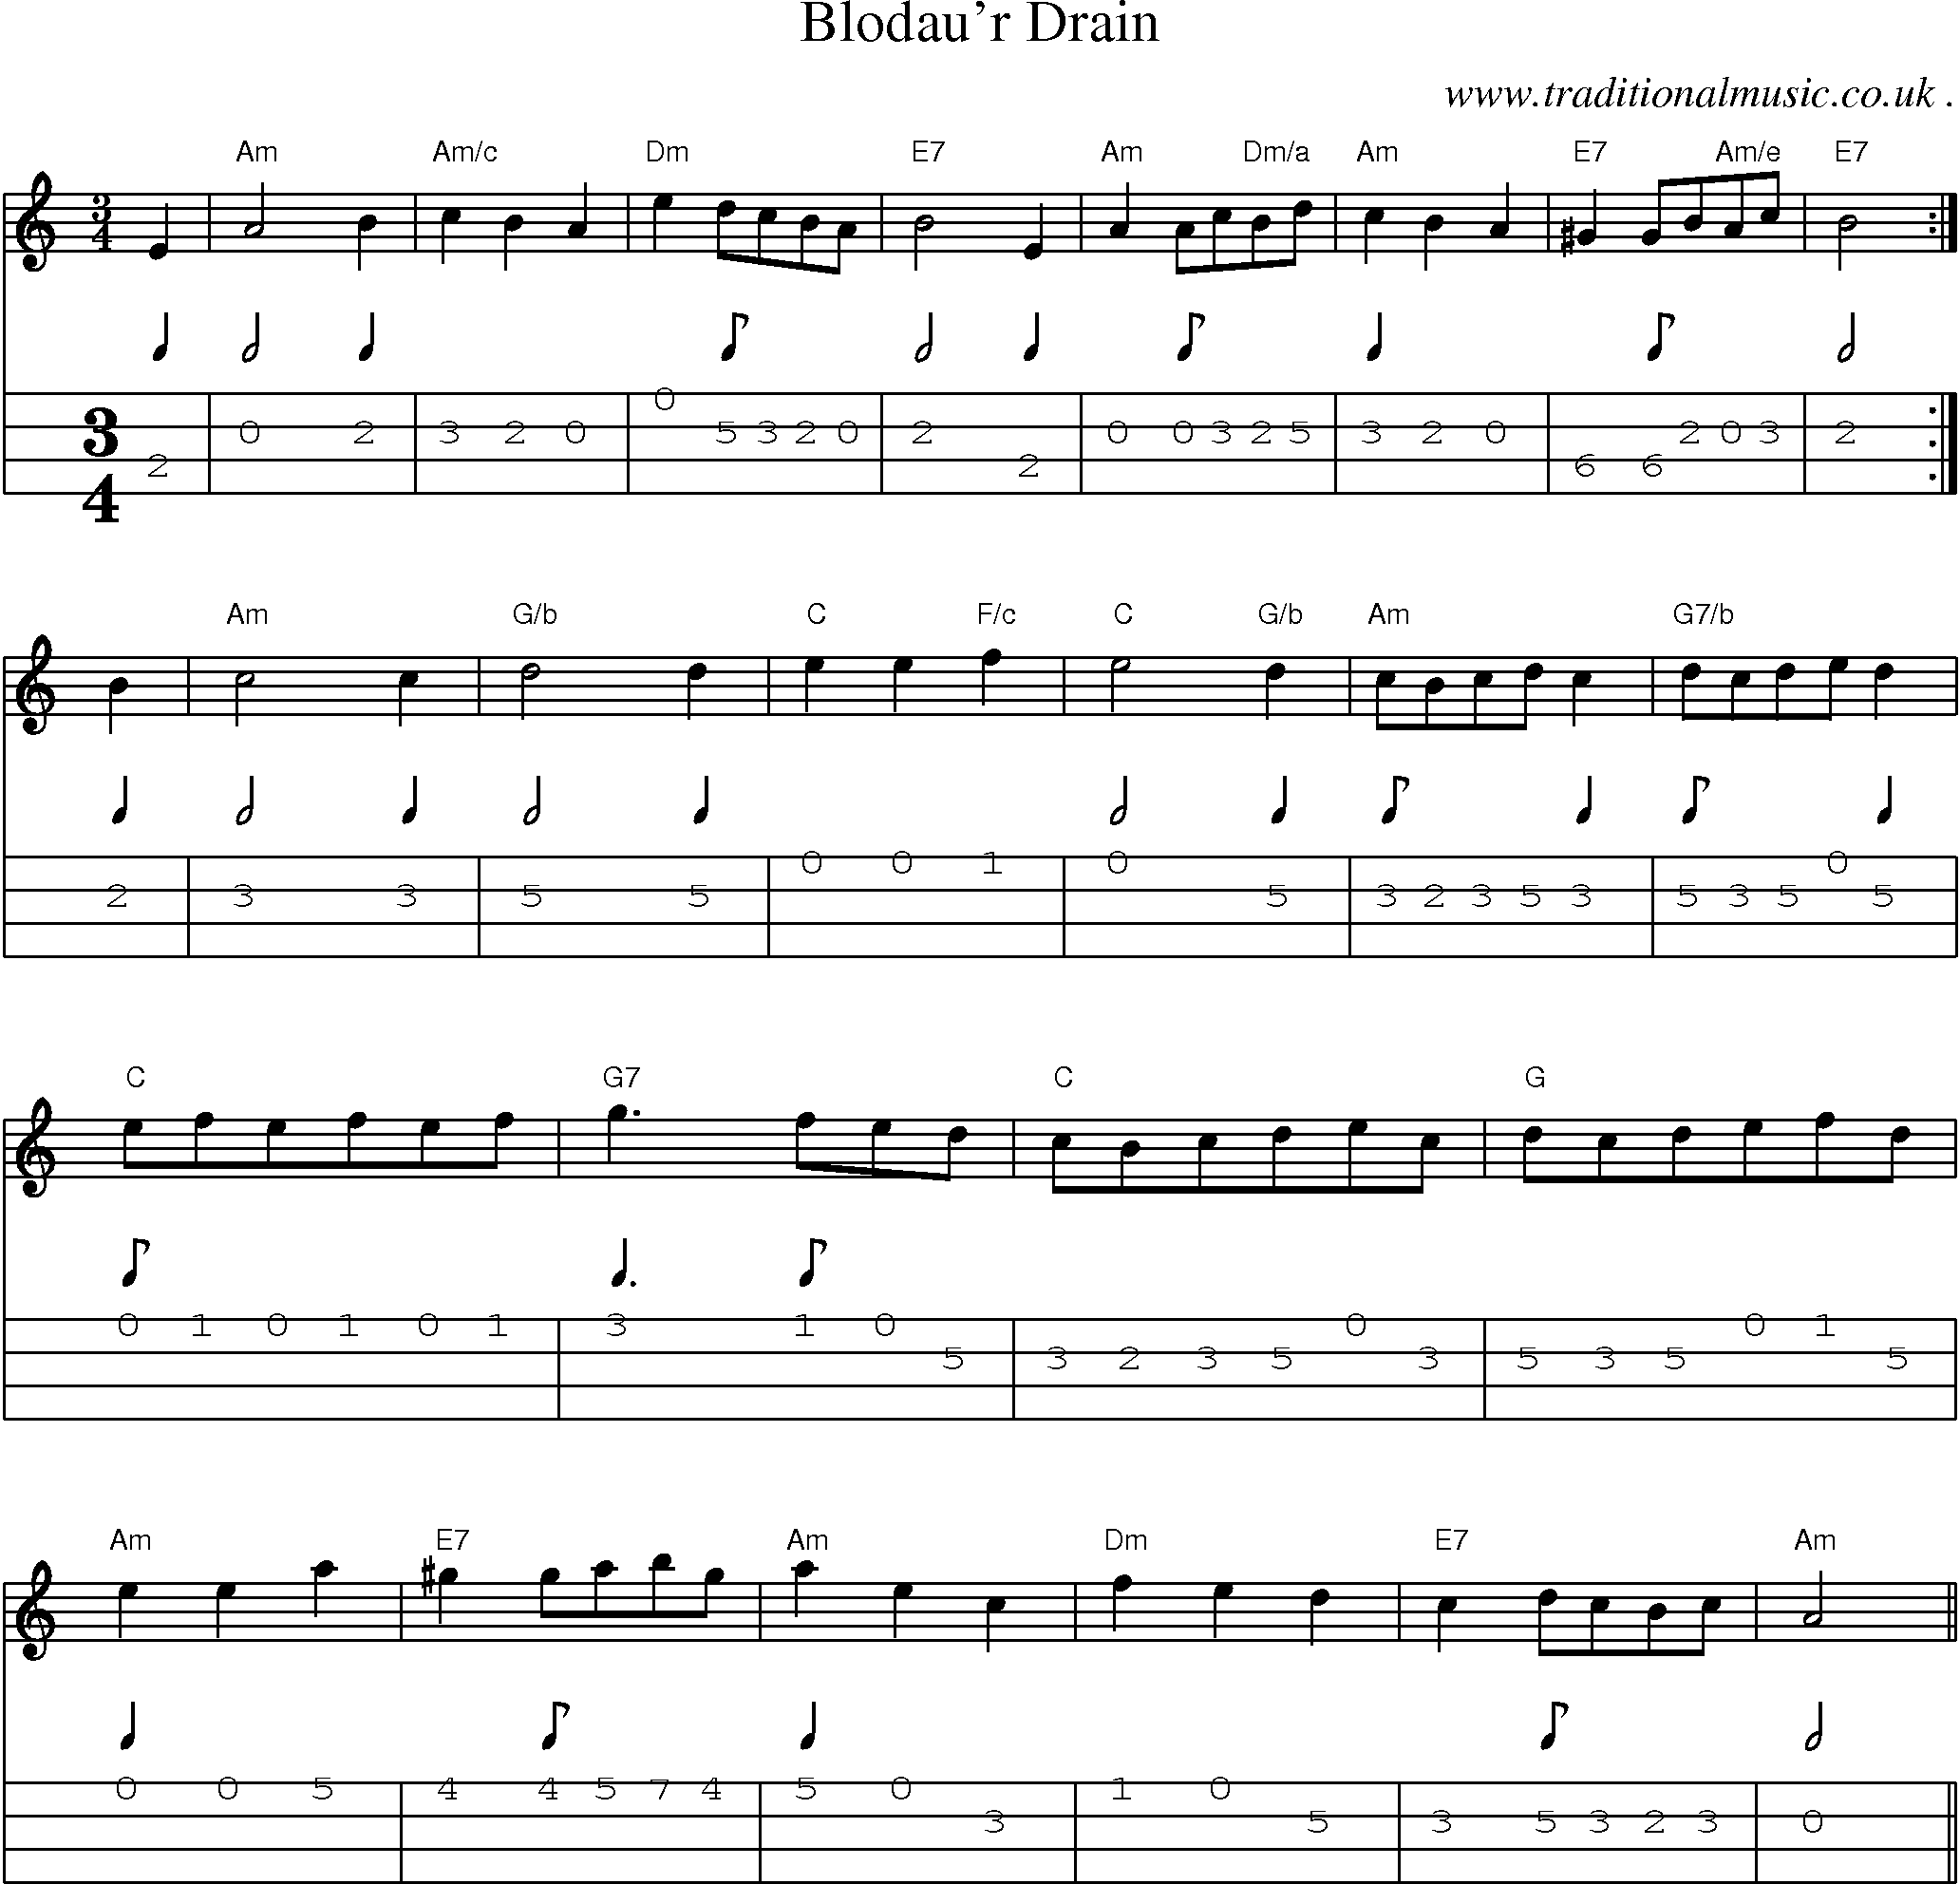 Sheet-Music and Mandolin Tabs for Blodaur Drain